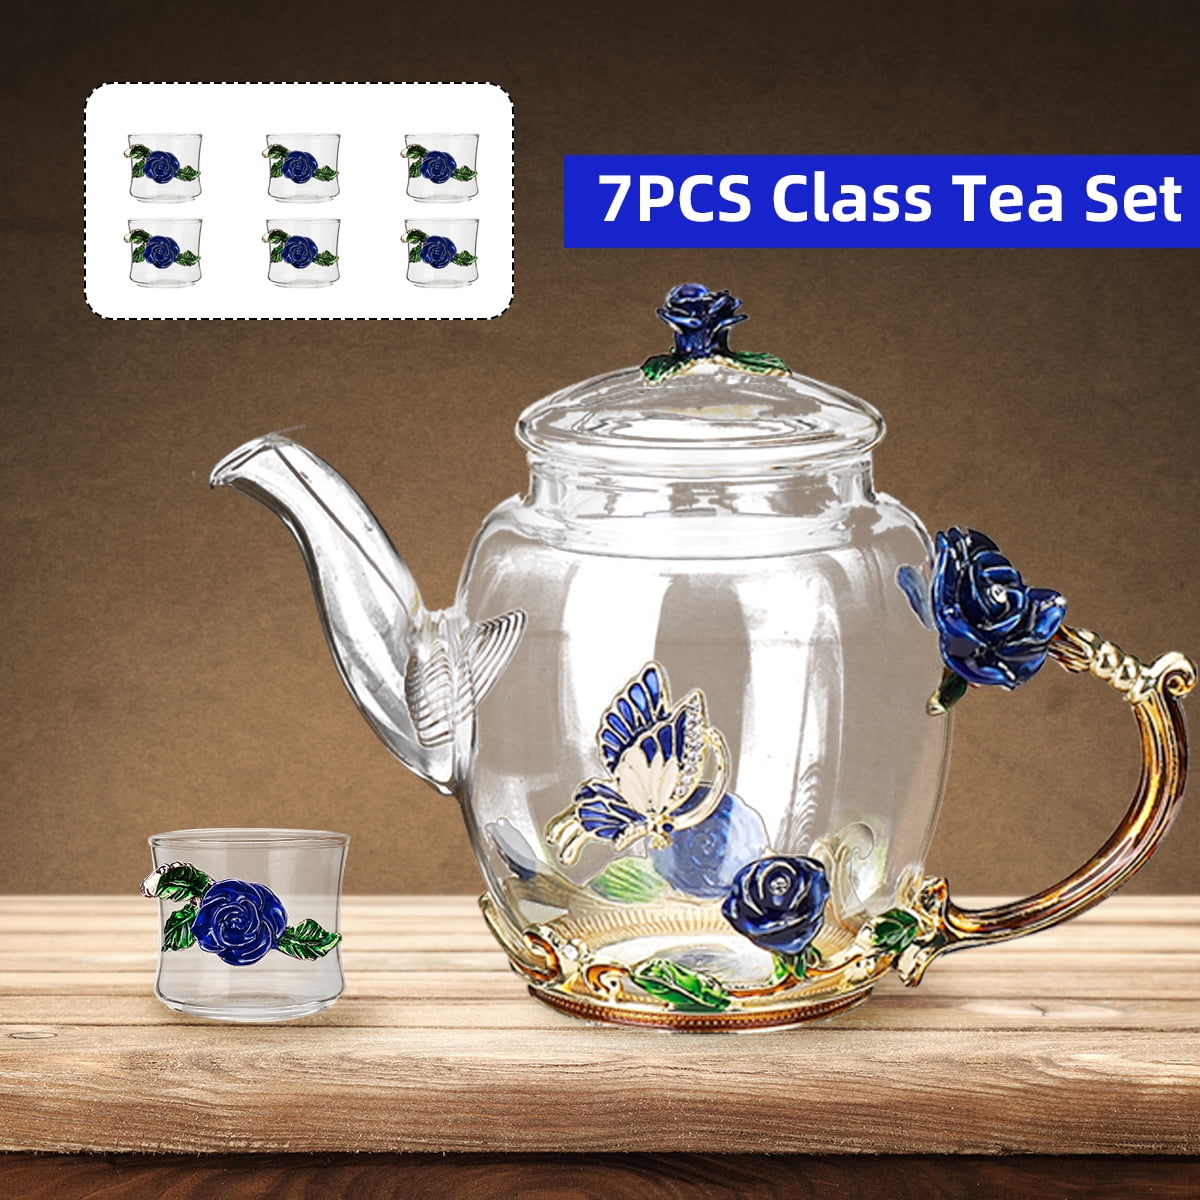 1980's Vintage Children's Tea Set Colorful Birdhouse Tea Set Teacups and Saucers Small Glazed Stoneware Teapot c